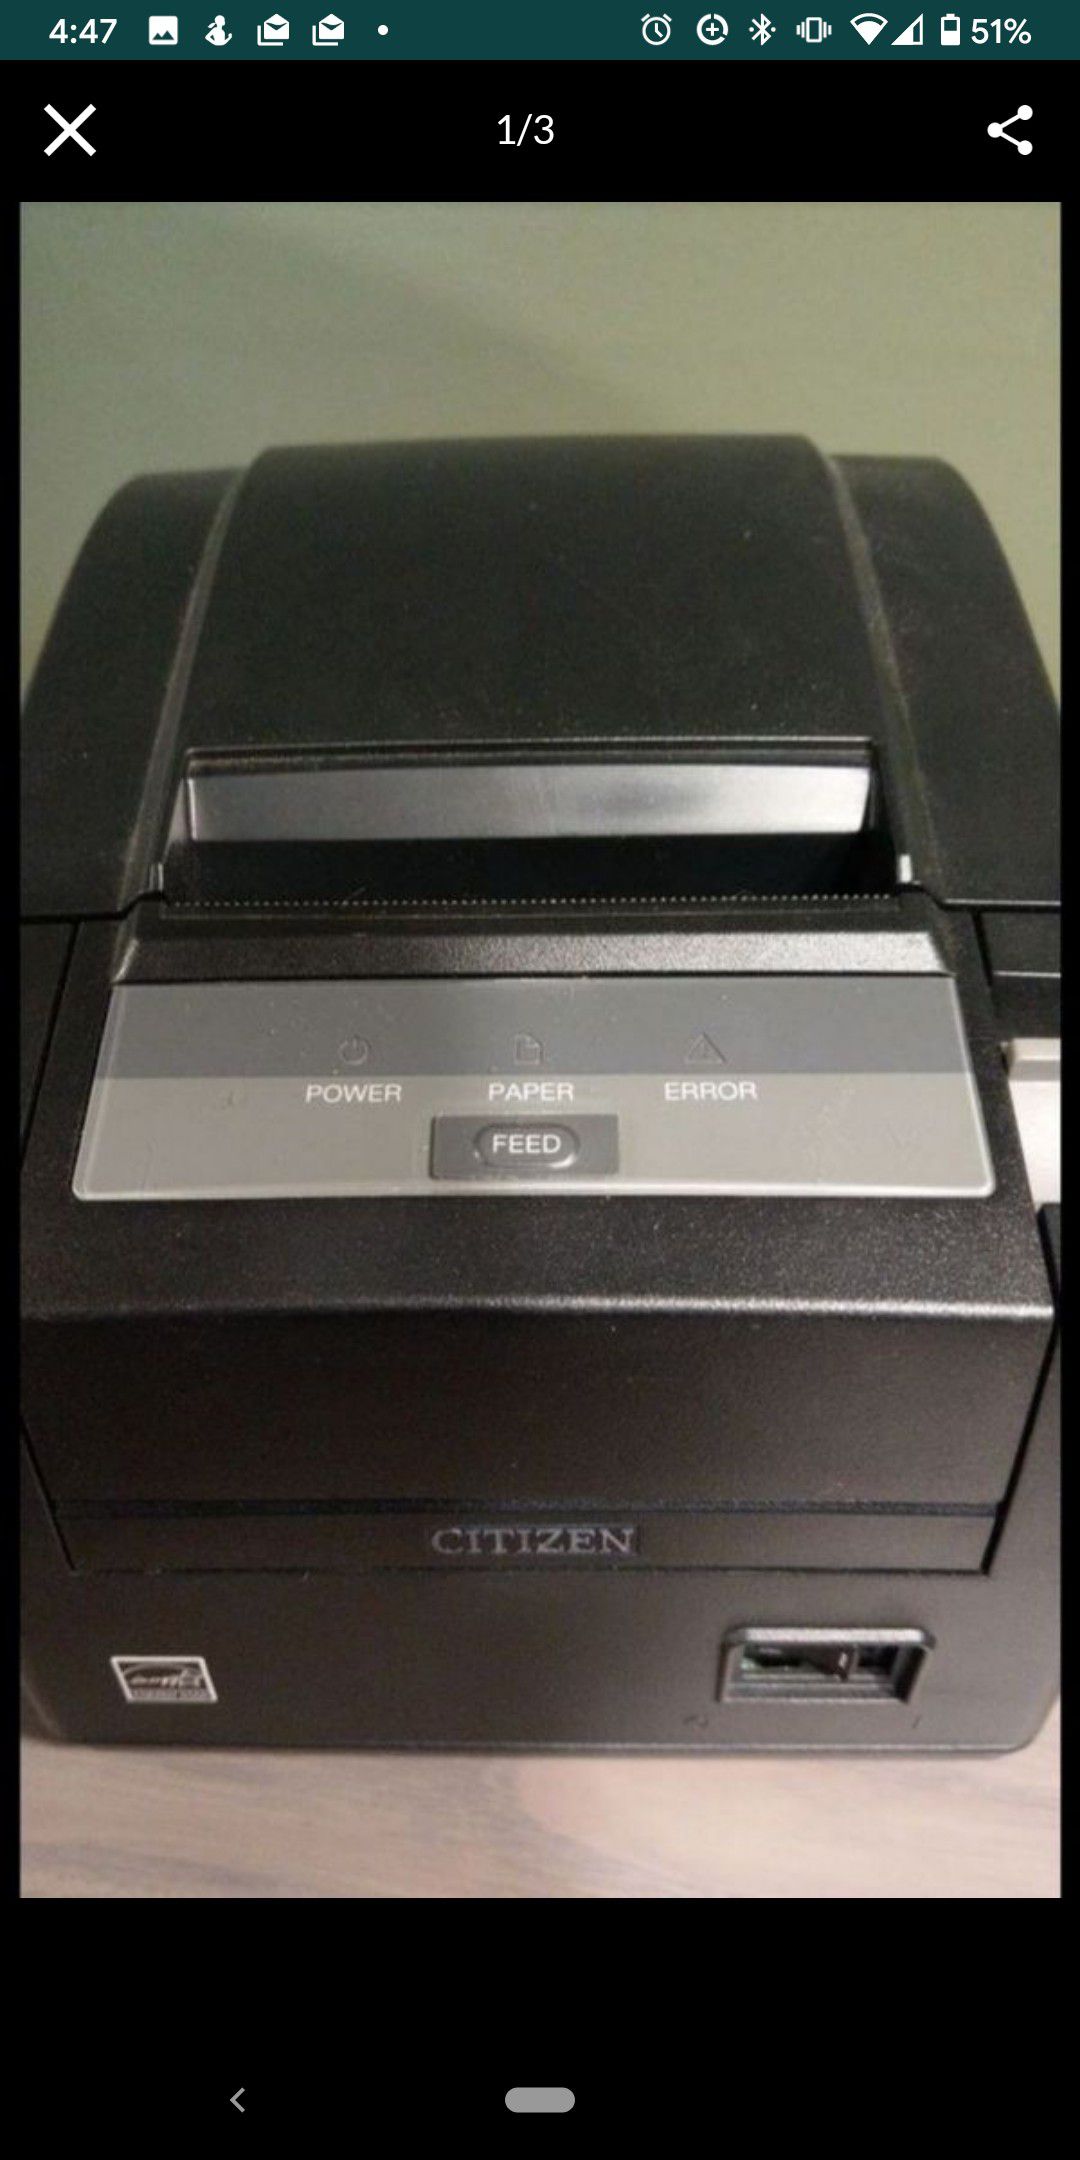 Citizens Thermal Receipt Printer